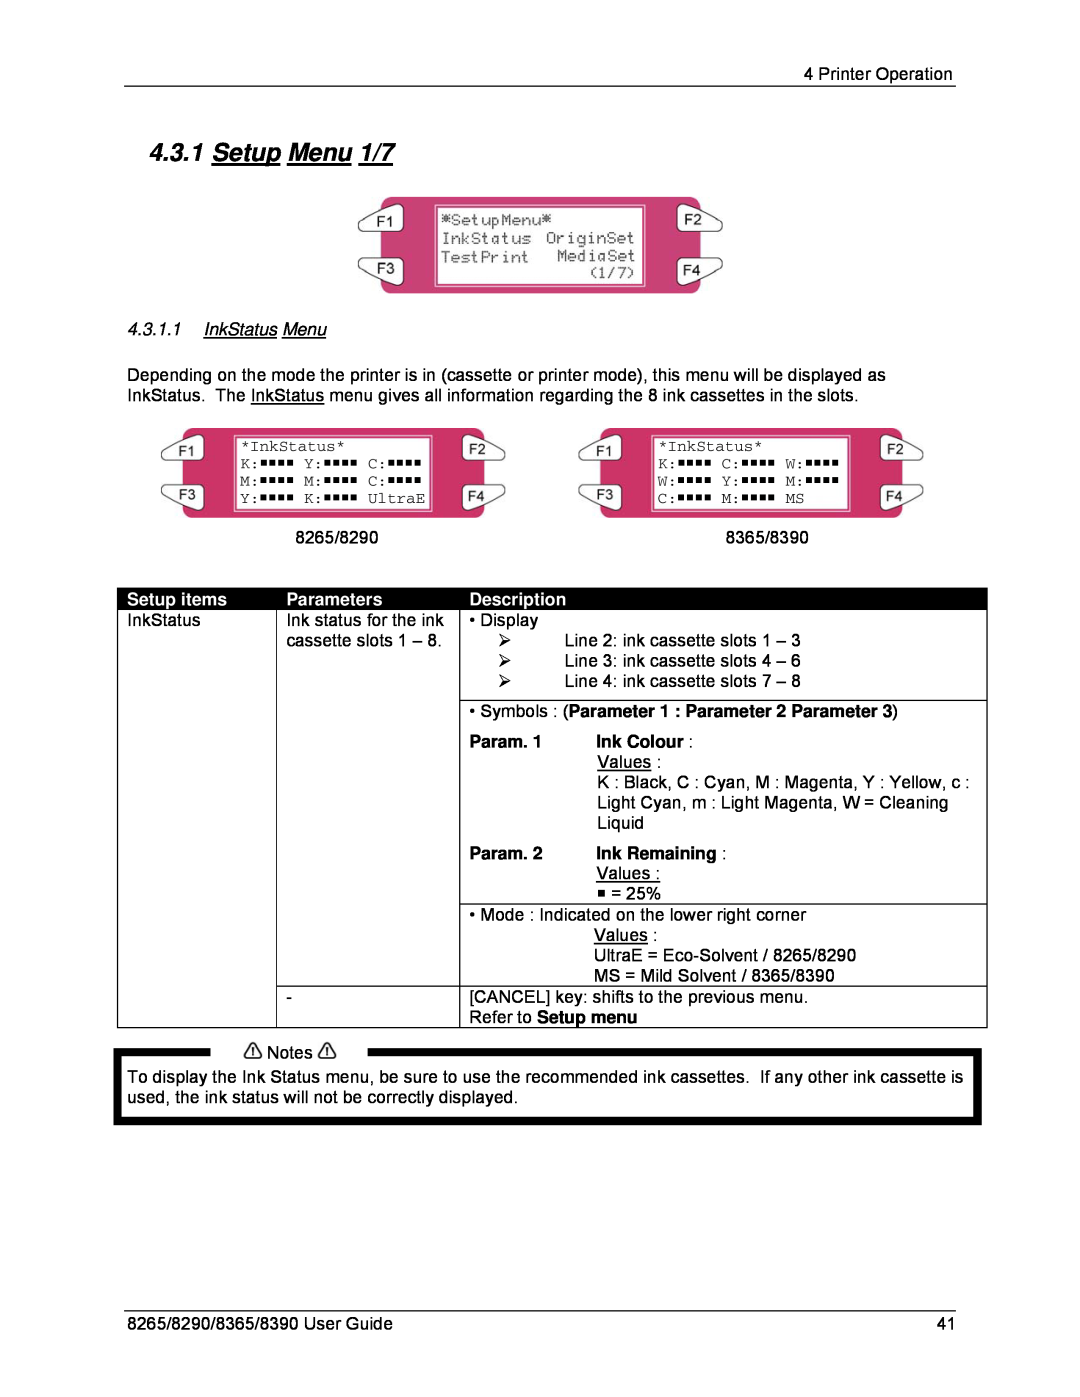 Xerox 8265 Setup Menu 1/7, InkStatus Menu, Setup items, Parameters, Description, Symbols Parameter 1 Parameter 2 Parameter 